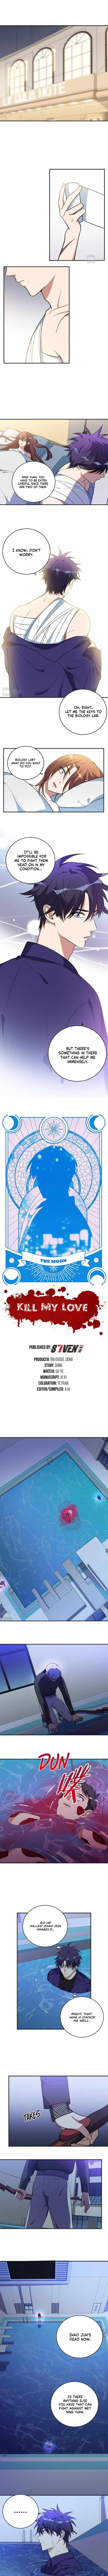 Kill My Love 27 1